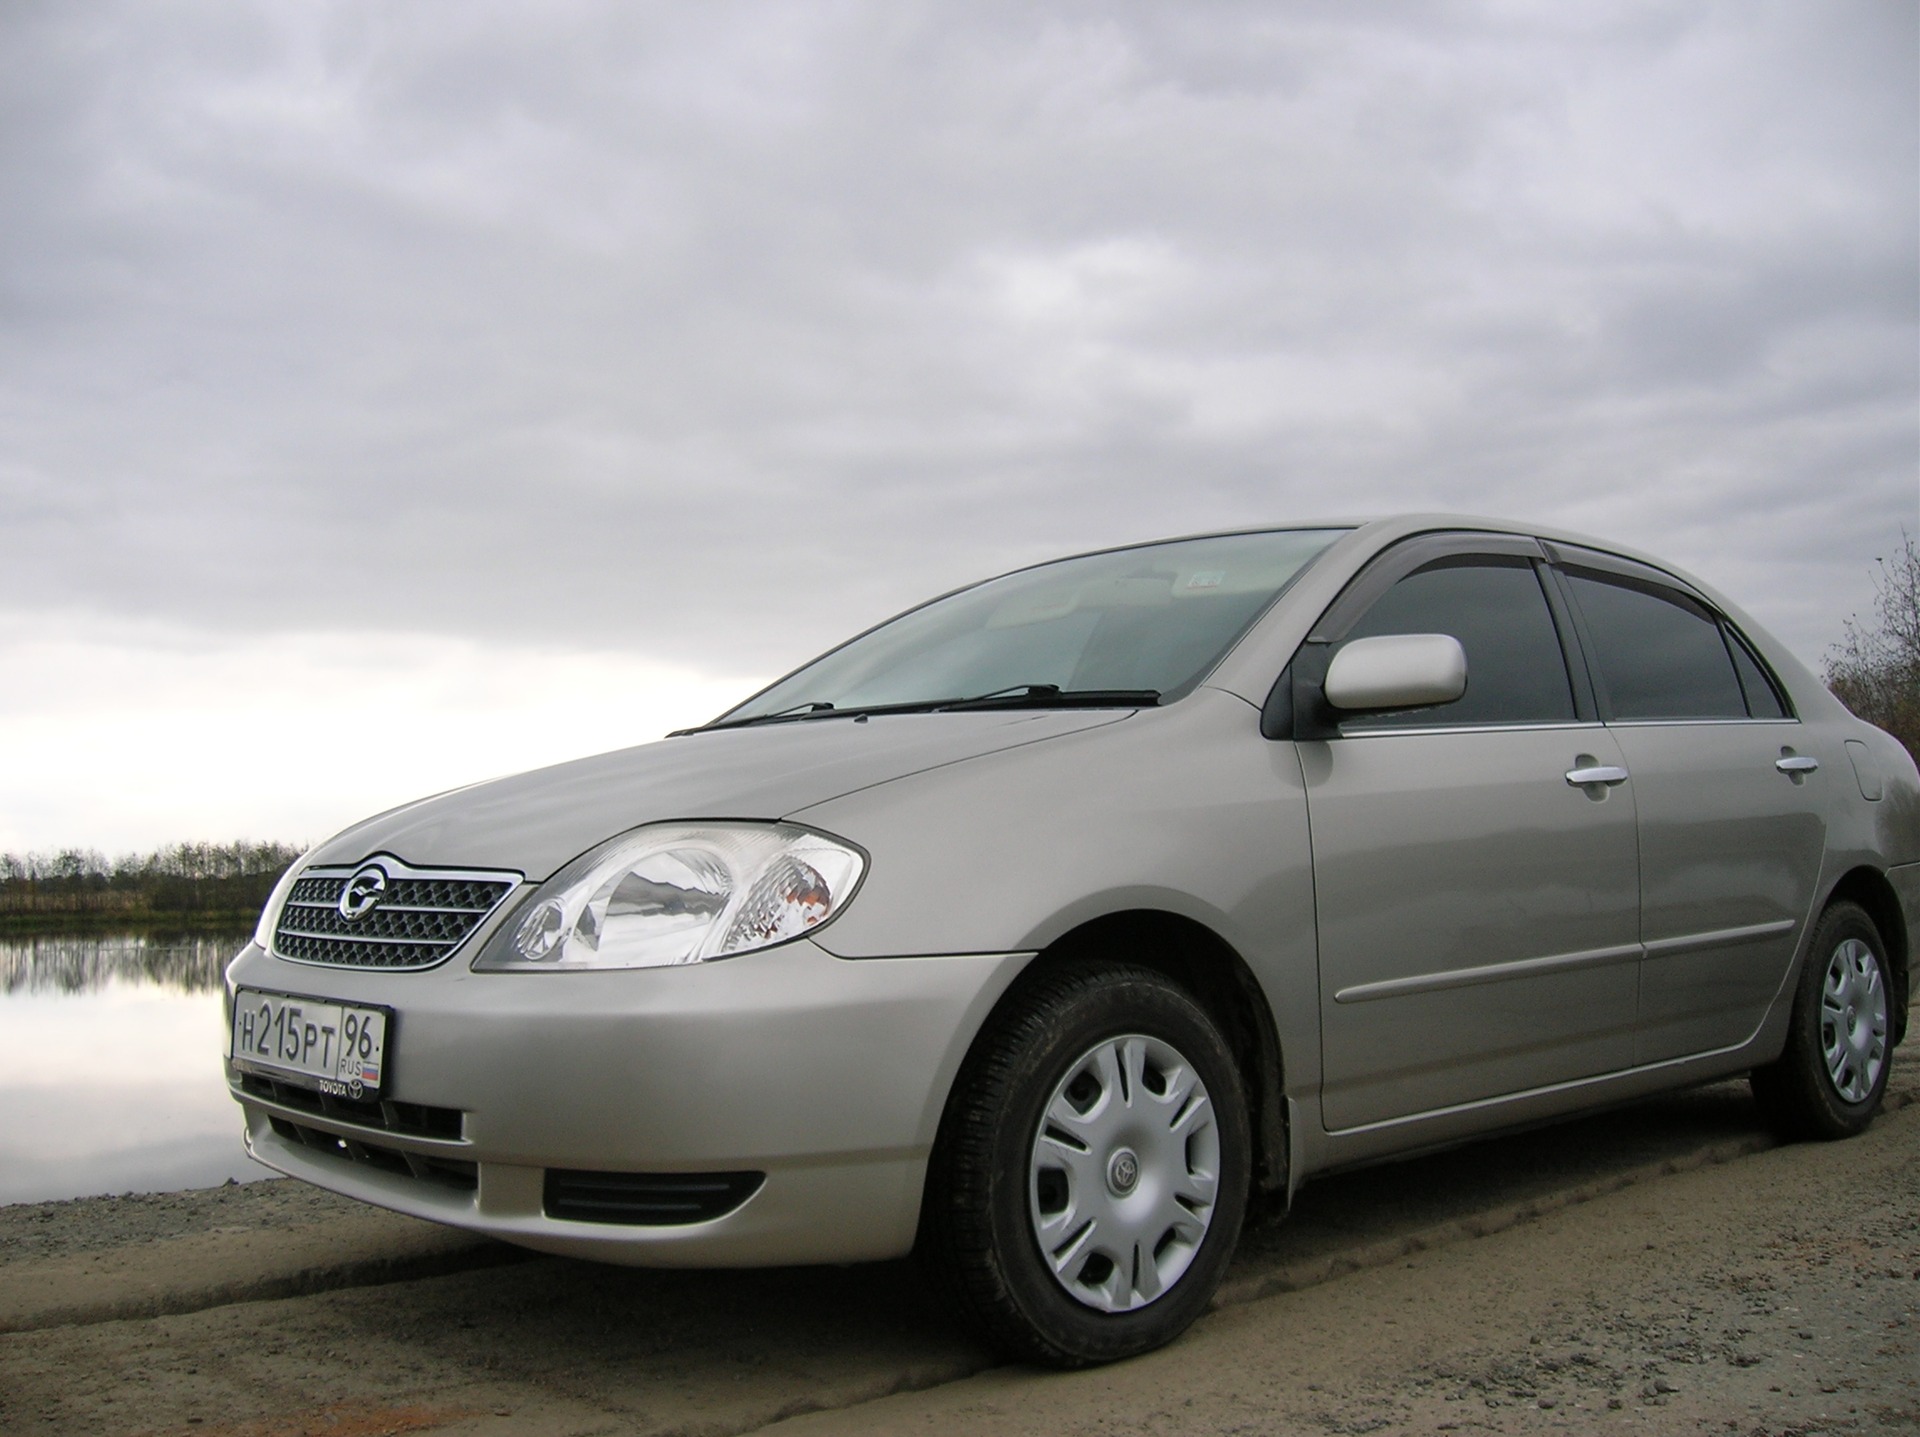  4 2010 Toyota Corolla 15 2002 